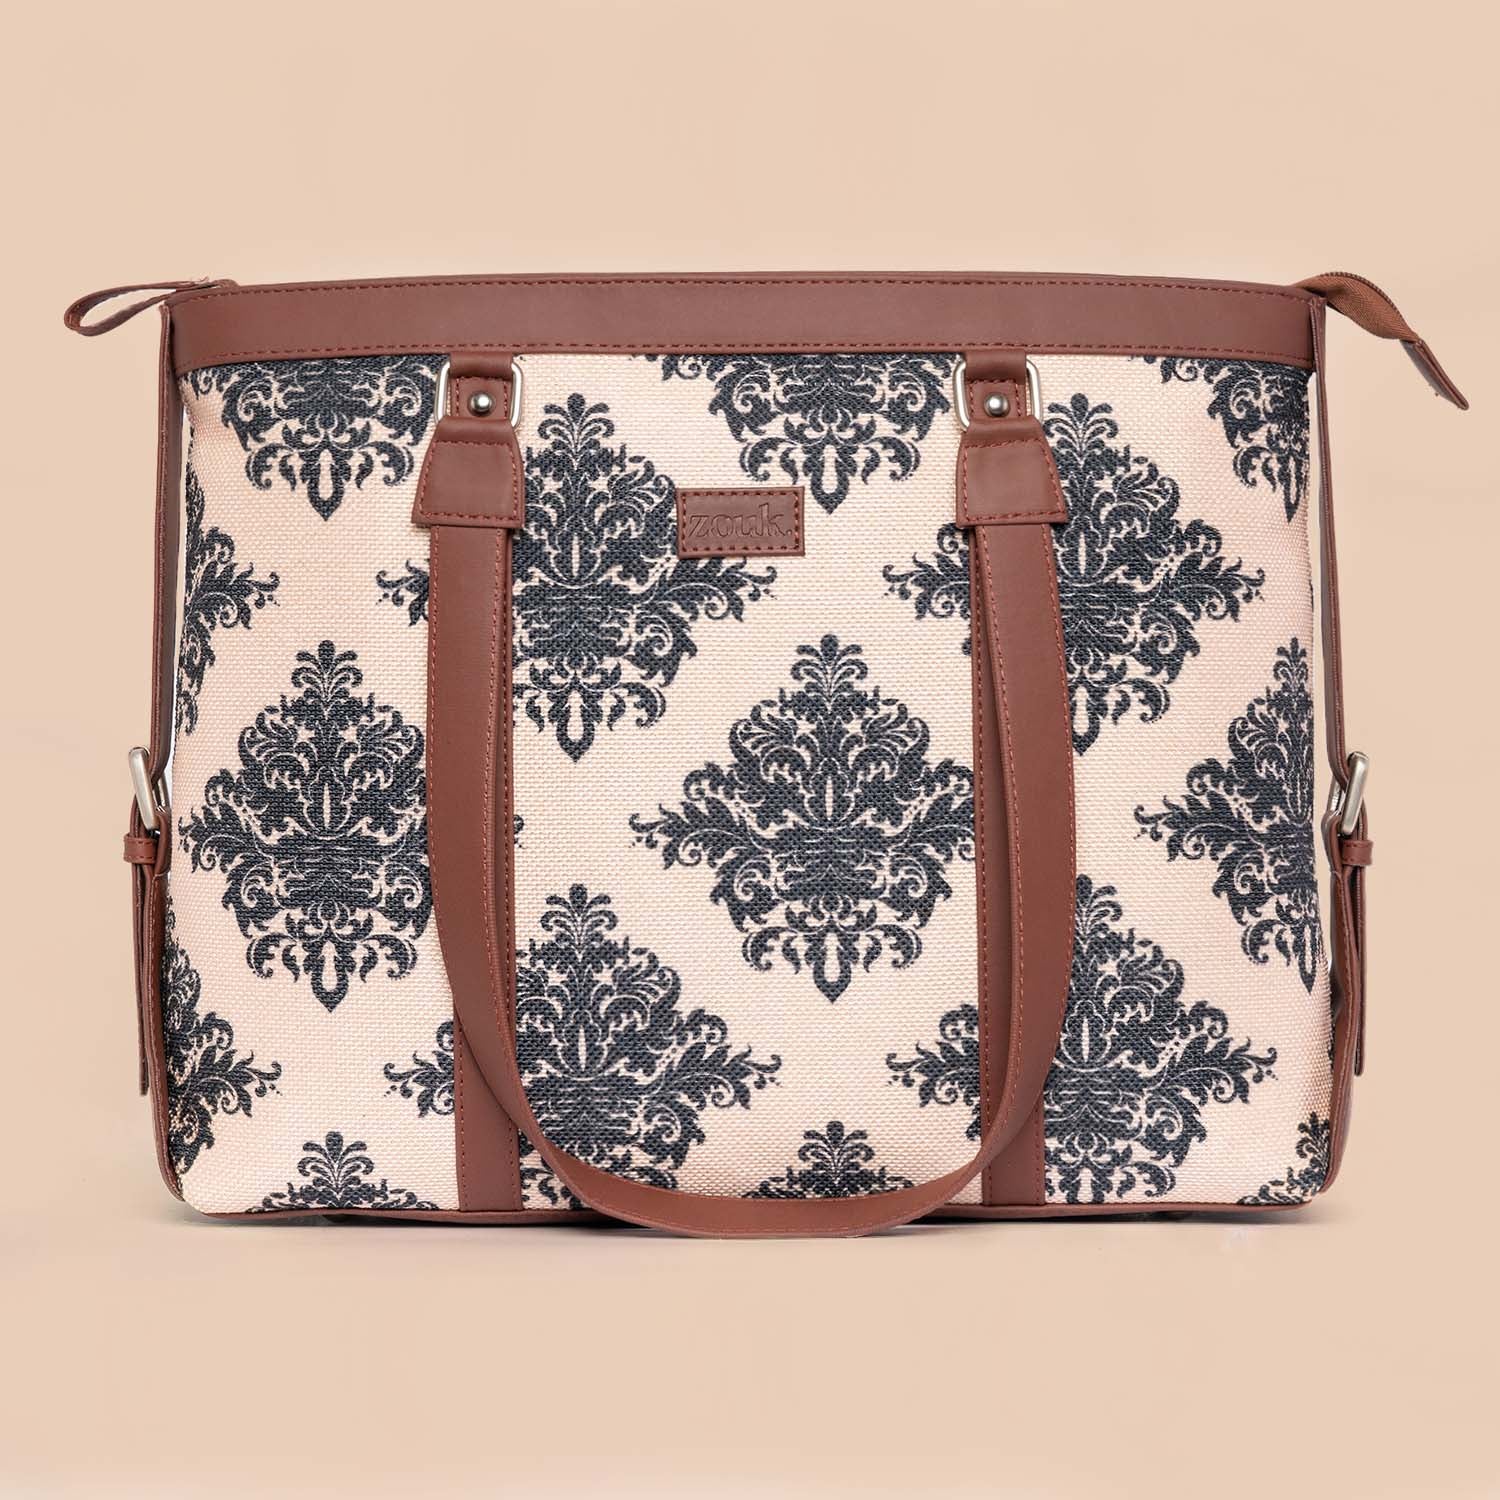 Ladies Bag - Buy Ladies Bag Online Starting at Just ₹114